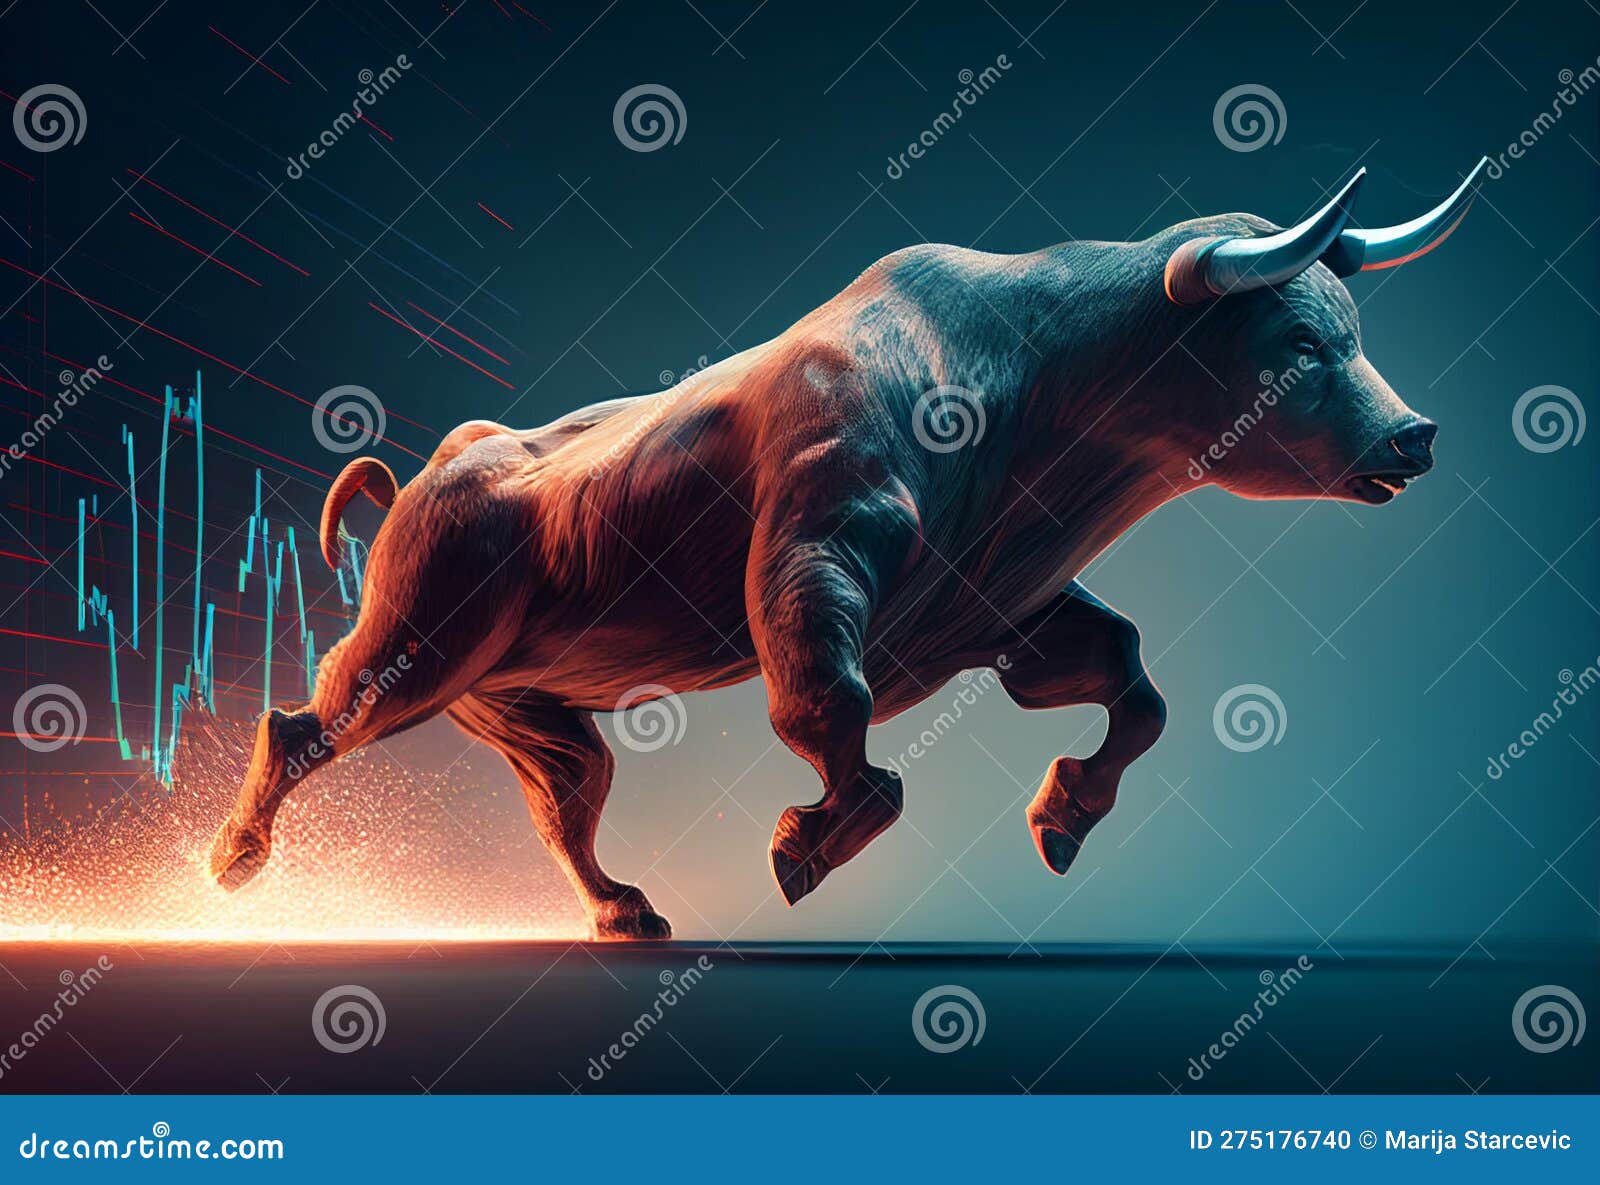 wallstreet bull, bullish stock market sentiment concept. finances and wealth growth